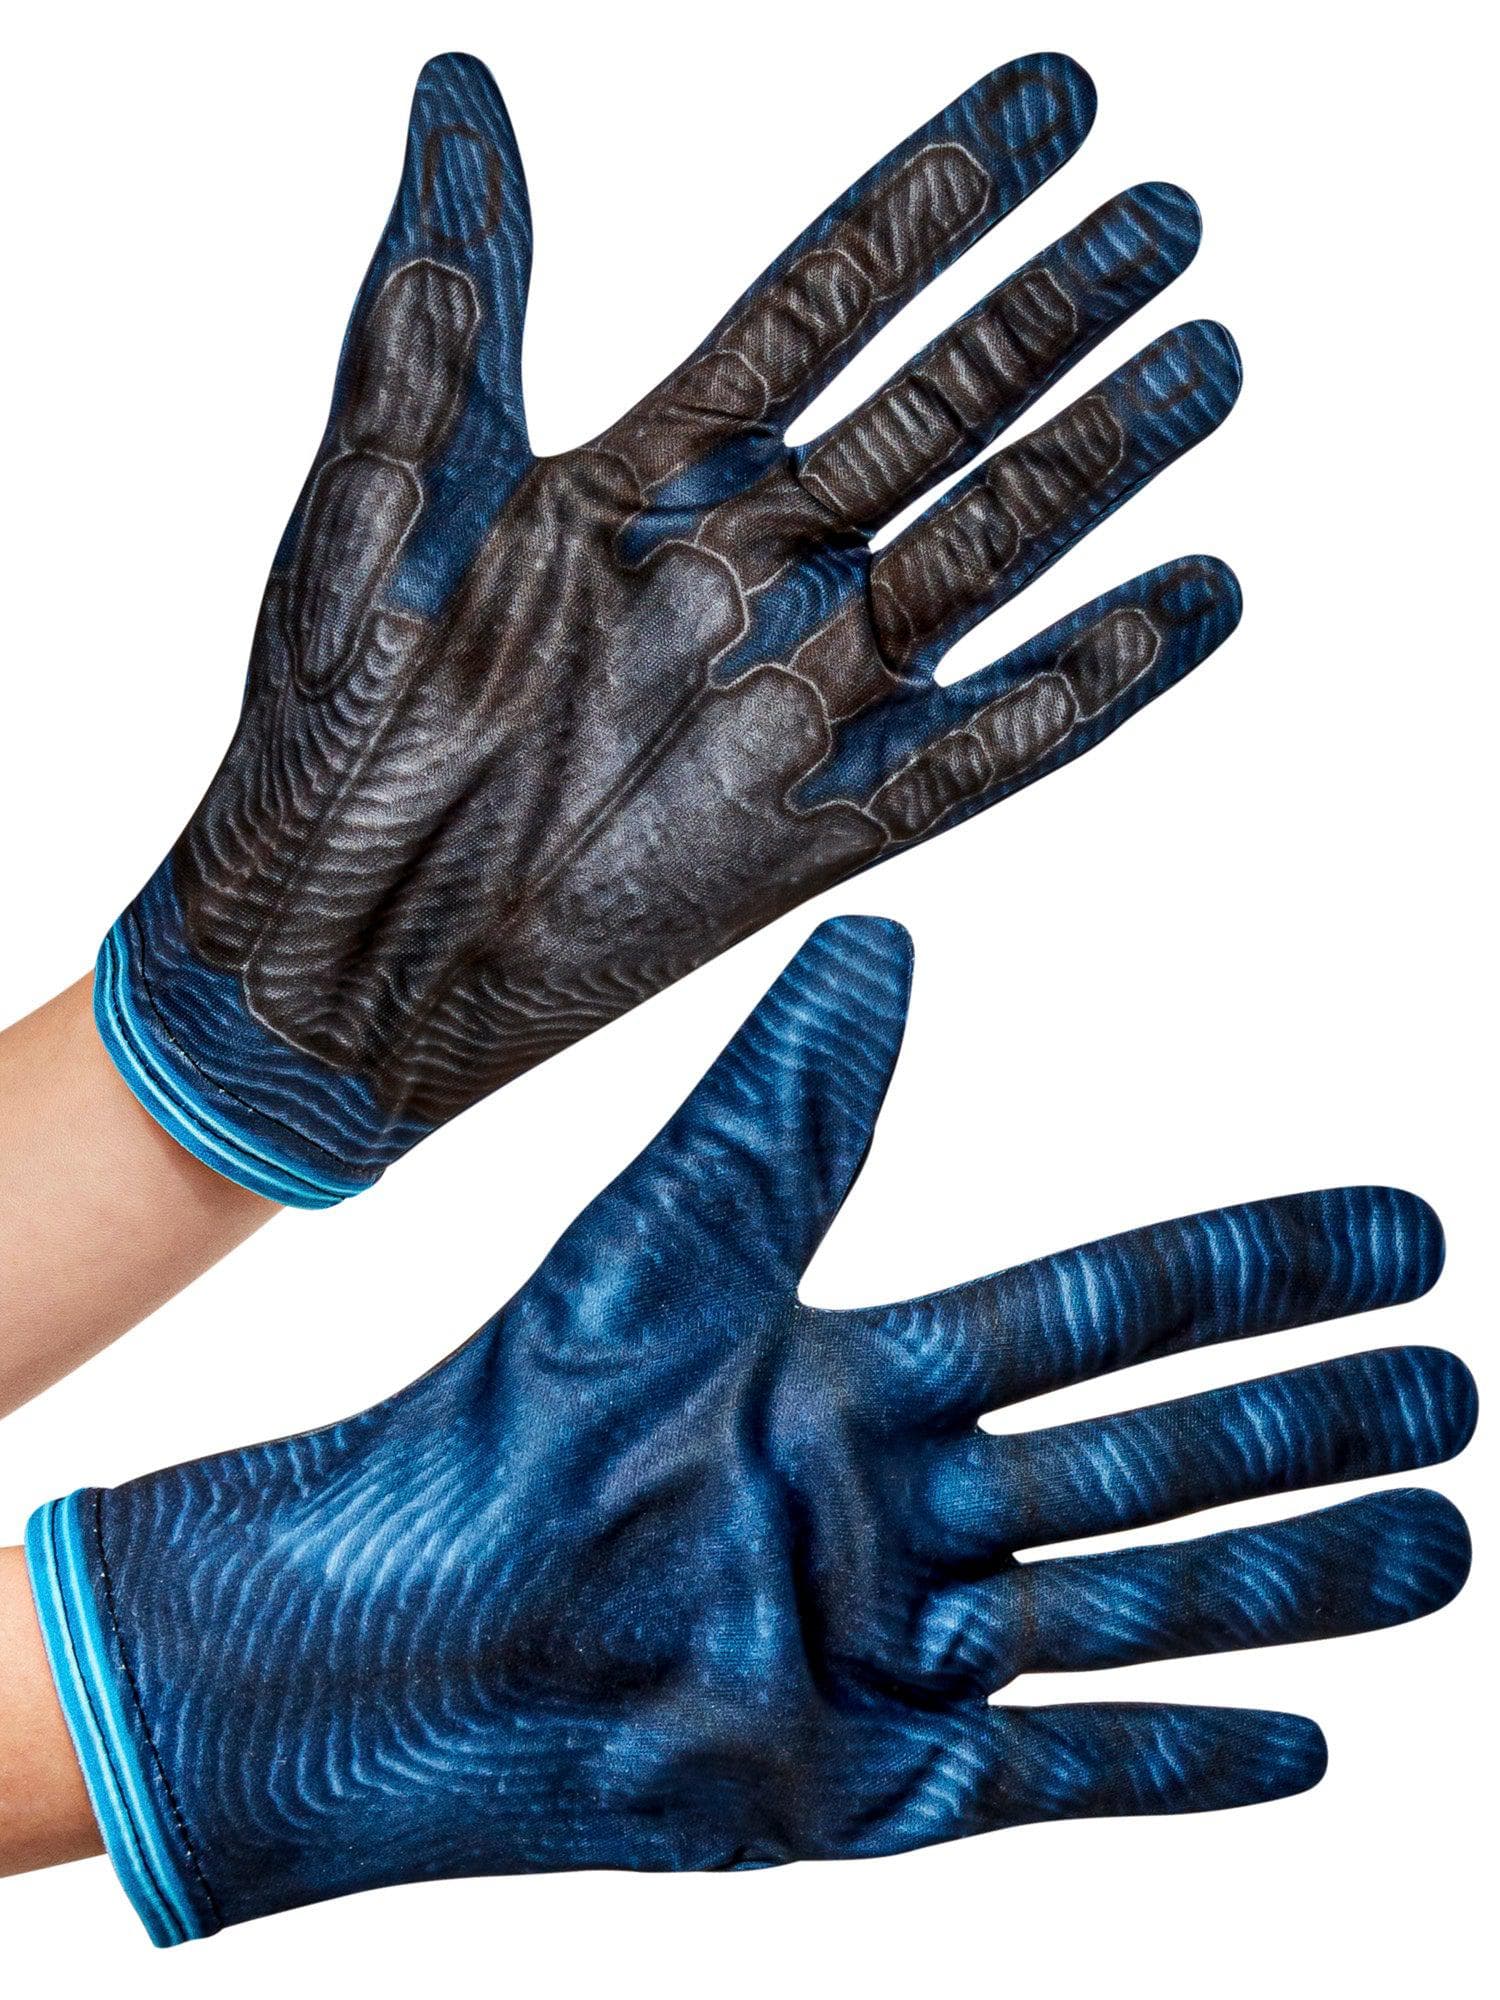 Kids' DC Comics Blue Beetle Gloves - costumes.com